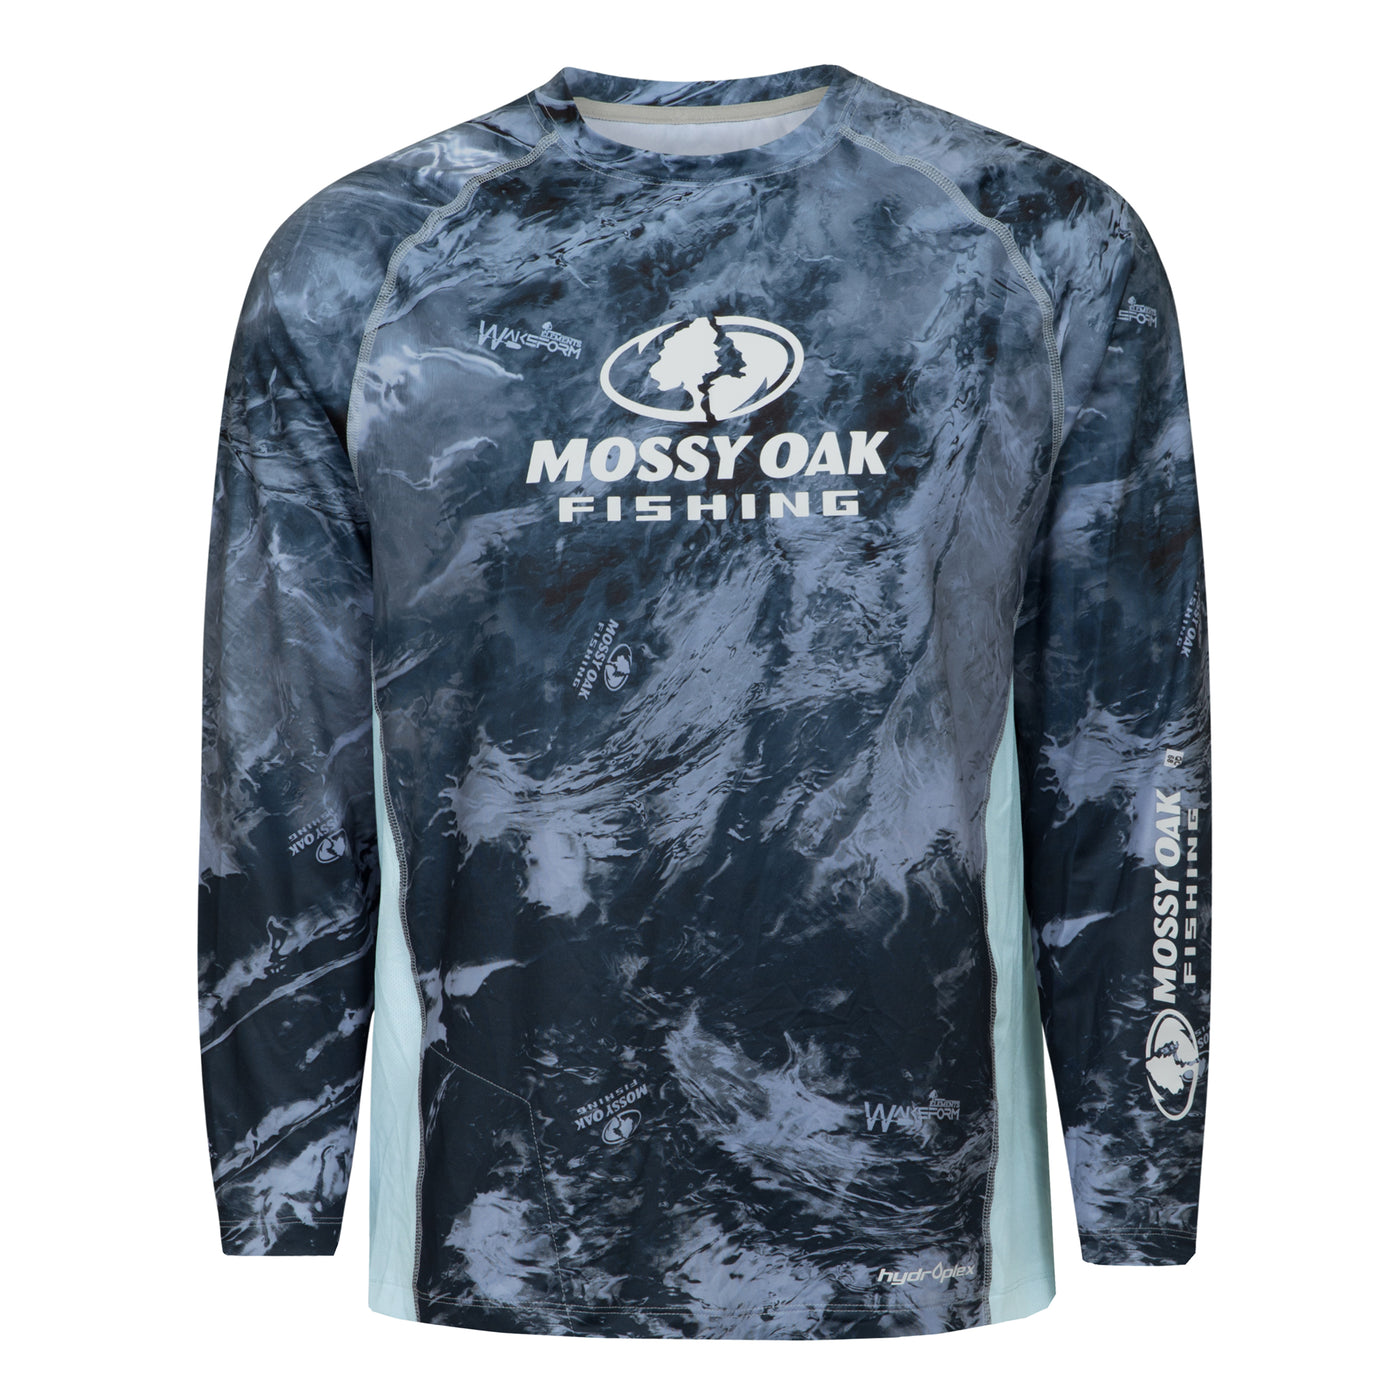 Men's Long Sleeve Performance Fishing Shirt – The Mossy, 50% OFF